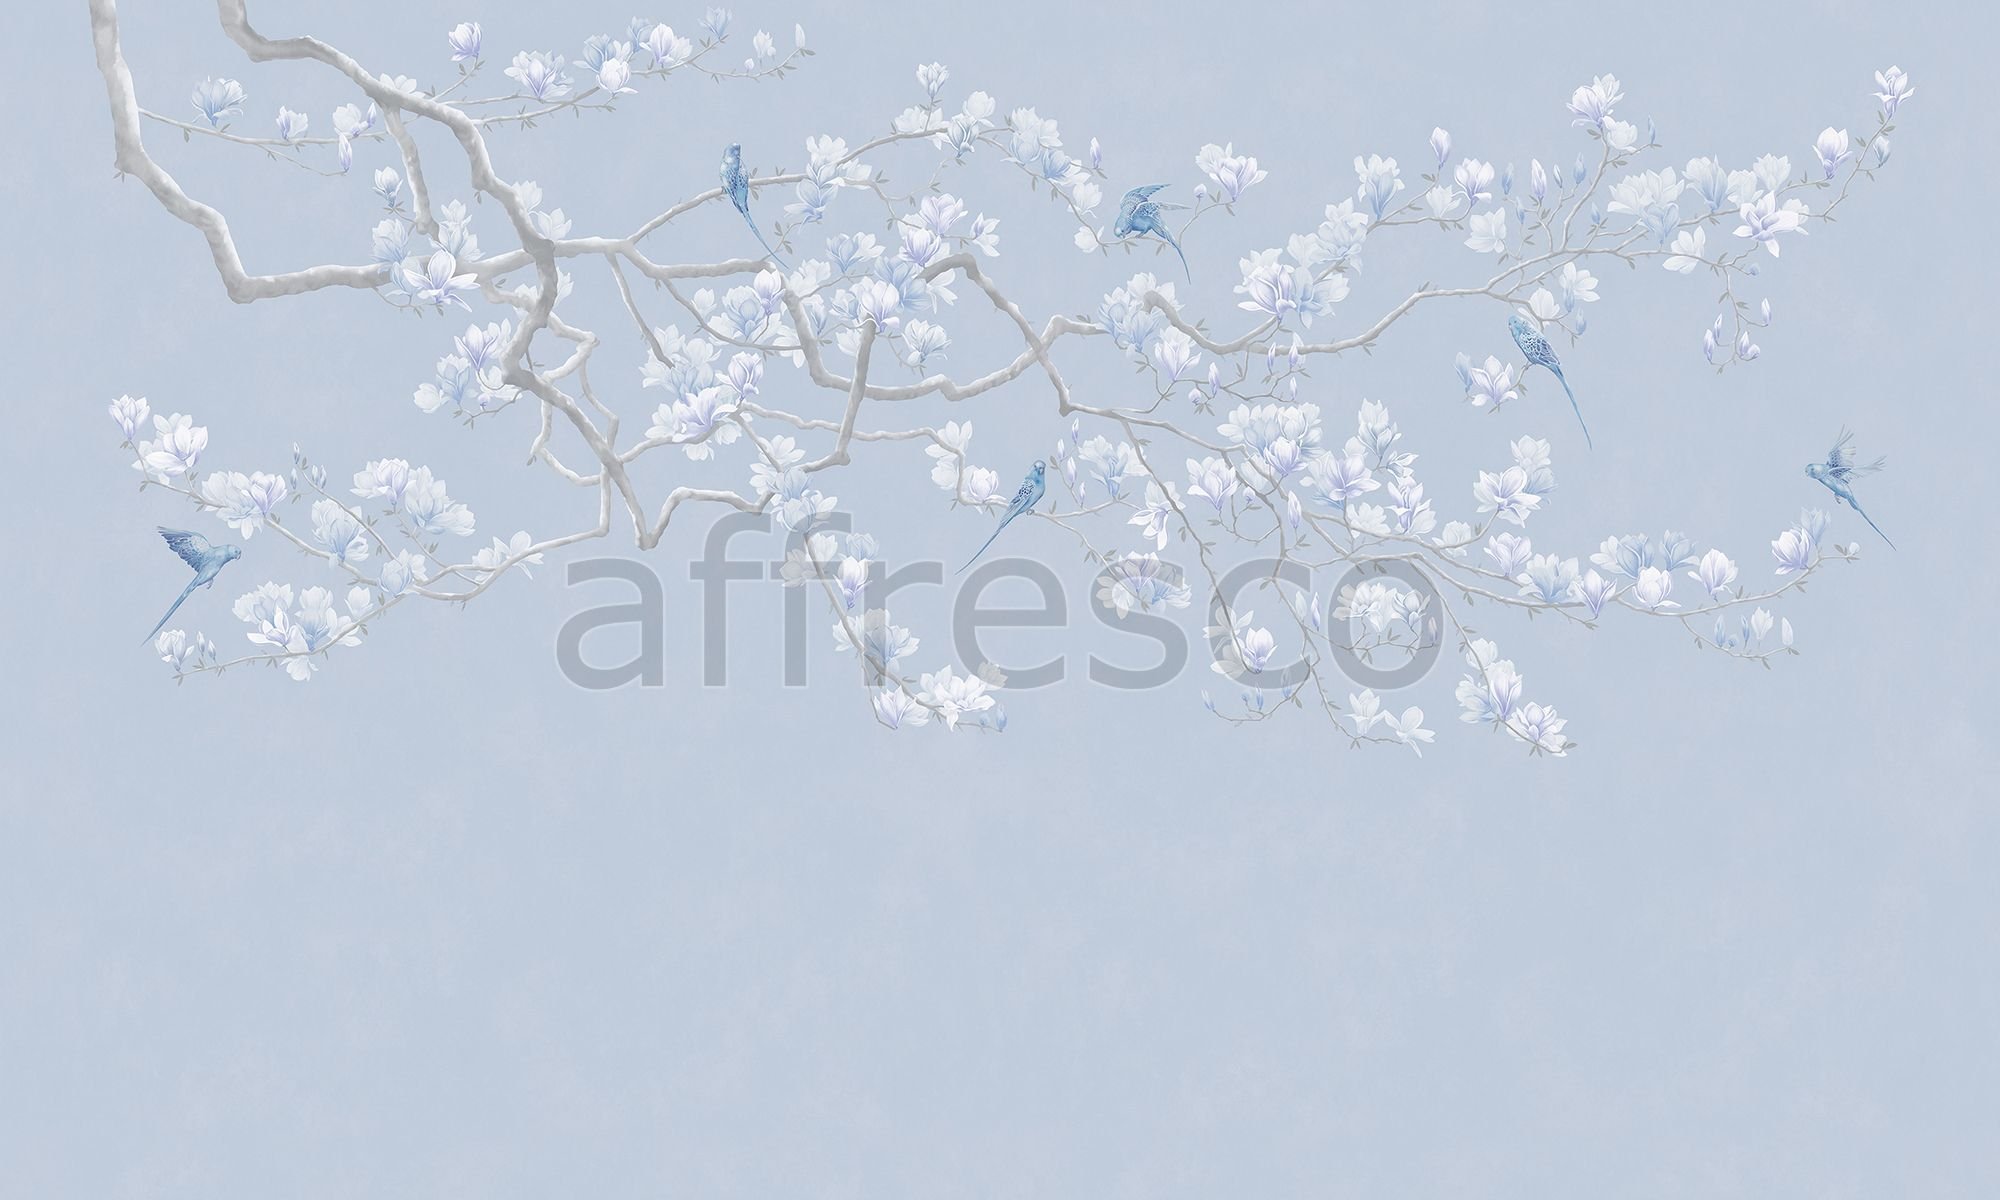 Фрески Affresco Atmosphere AF506-COL4